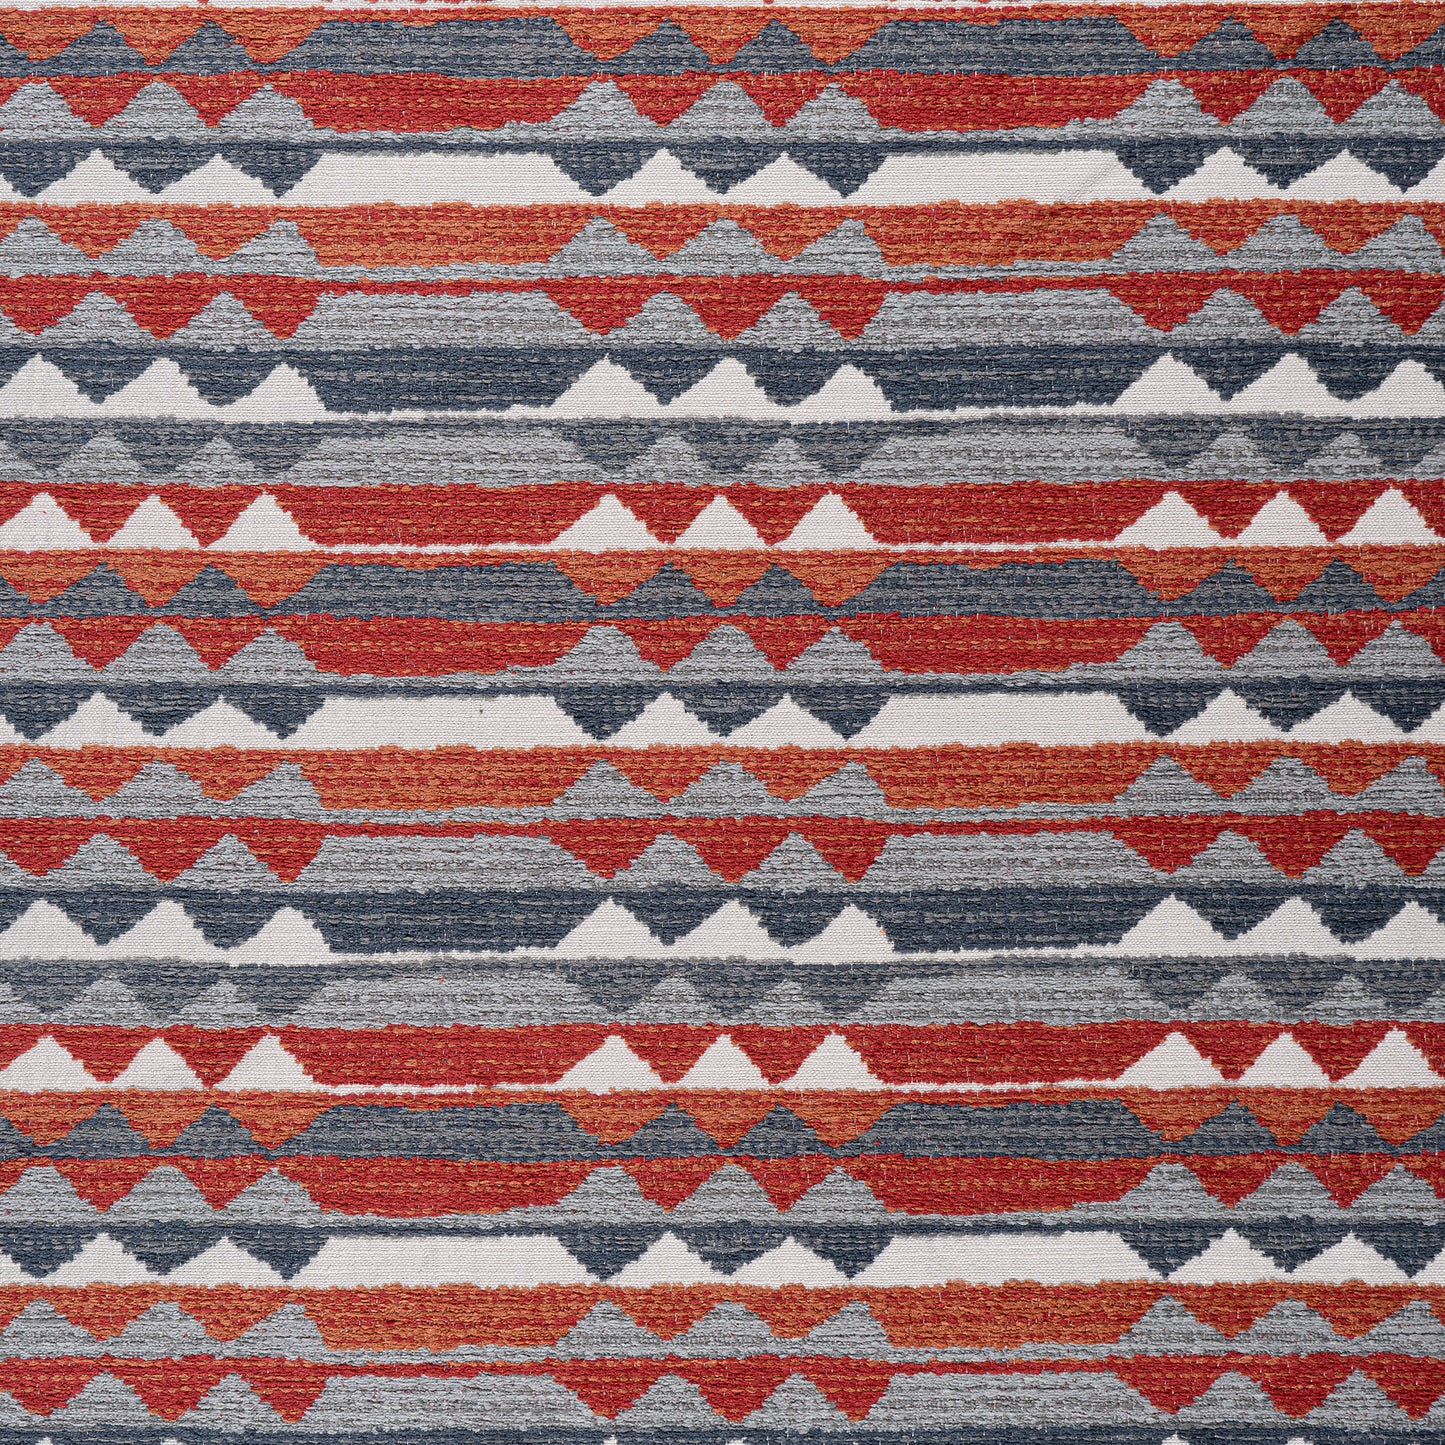 Purchase Thibaut Fabric SKU W78378 pattern name Saranac color Campfire